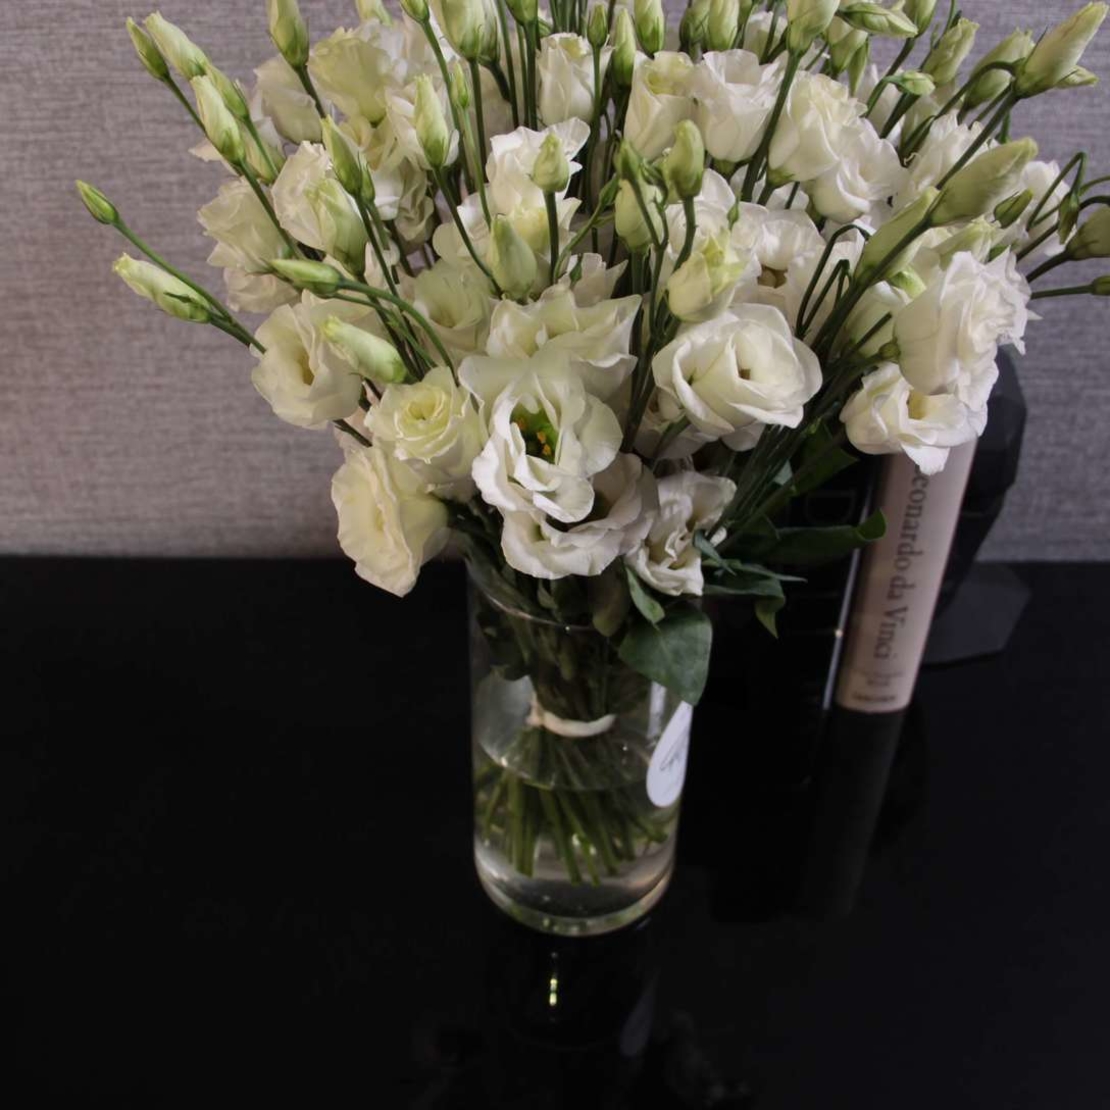 White lisianthus in a vase